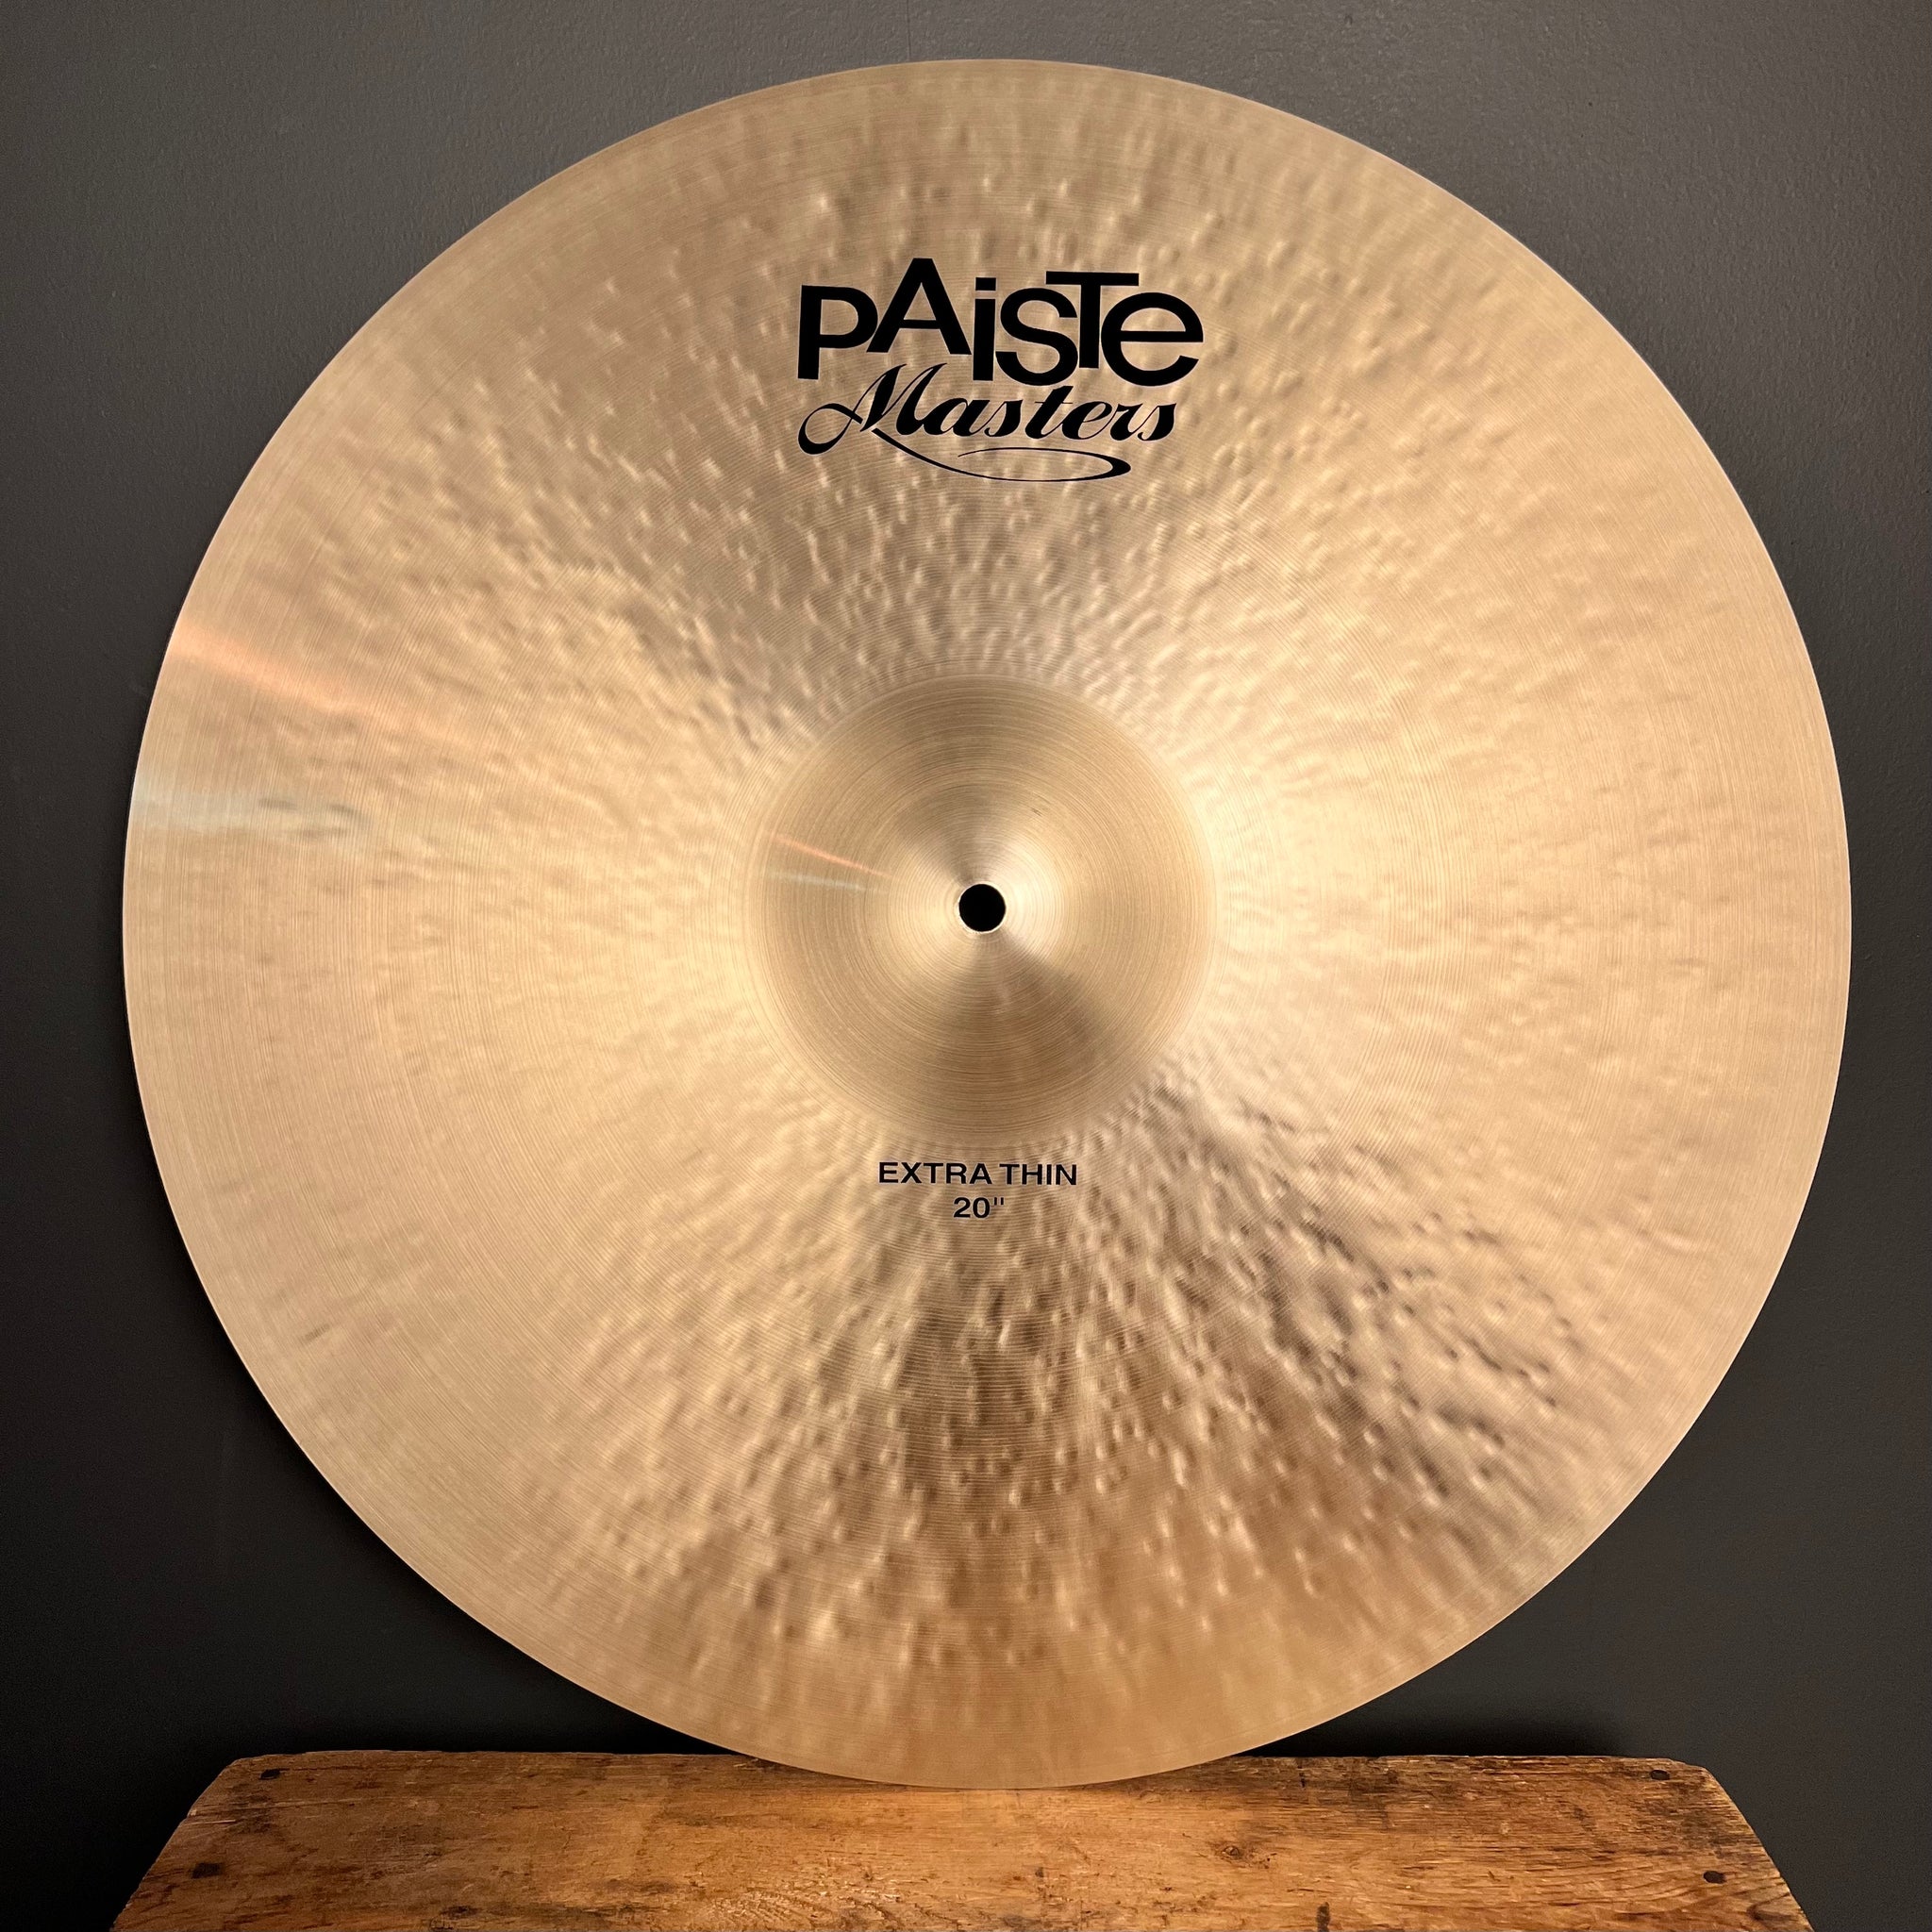 NEW Paiste 20" Masters Extra-Thin Crash Cymbal - 1600g